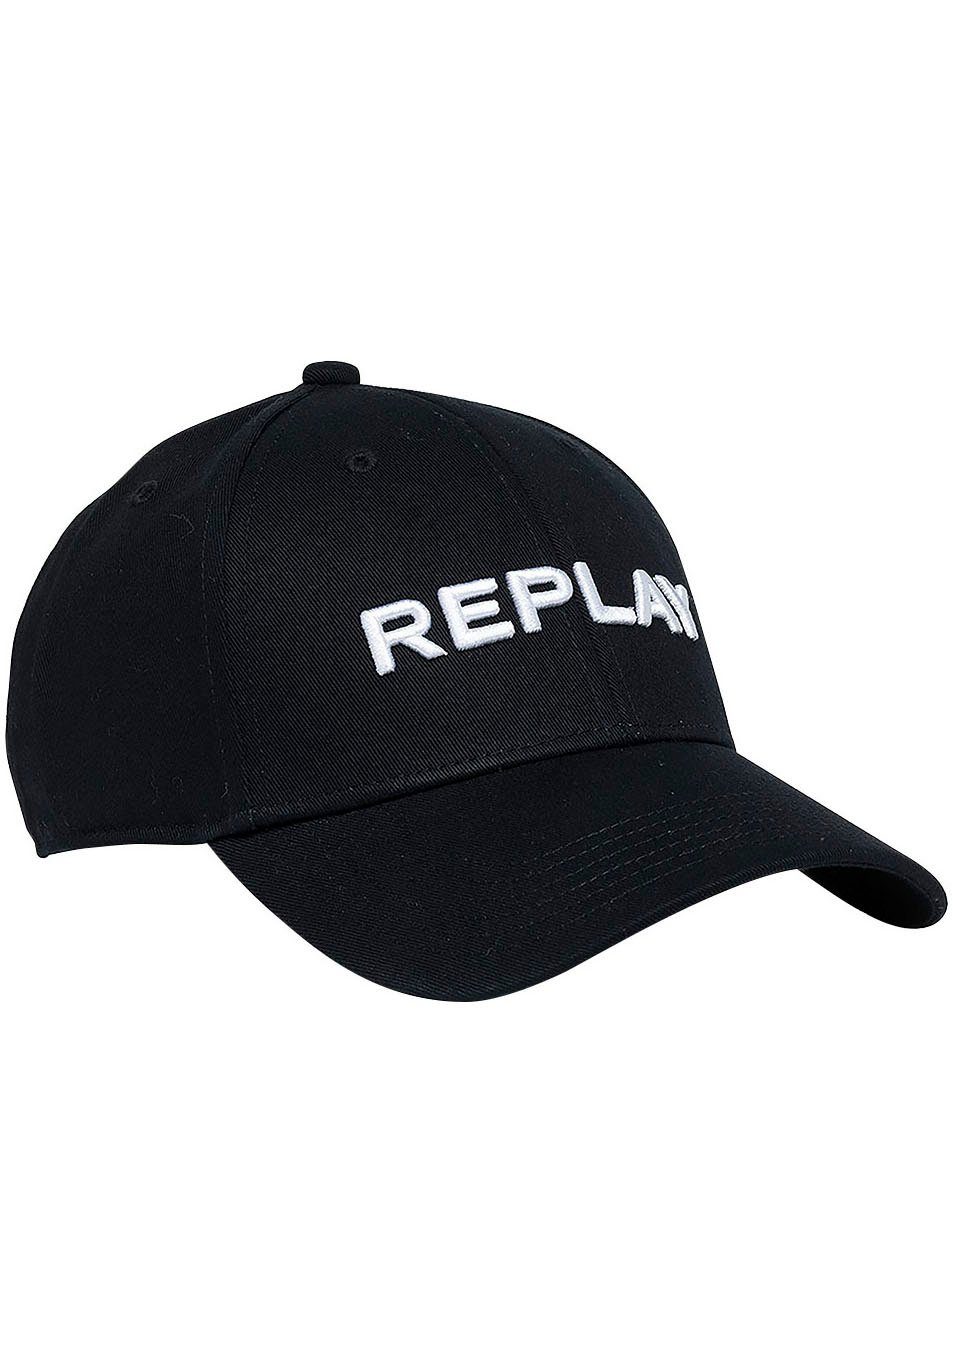 mit COMPONENTE NATURALE black Cap Logo-Stickerei Baseball Replay